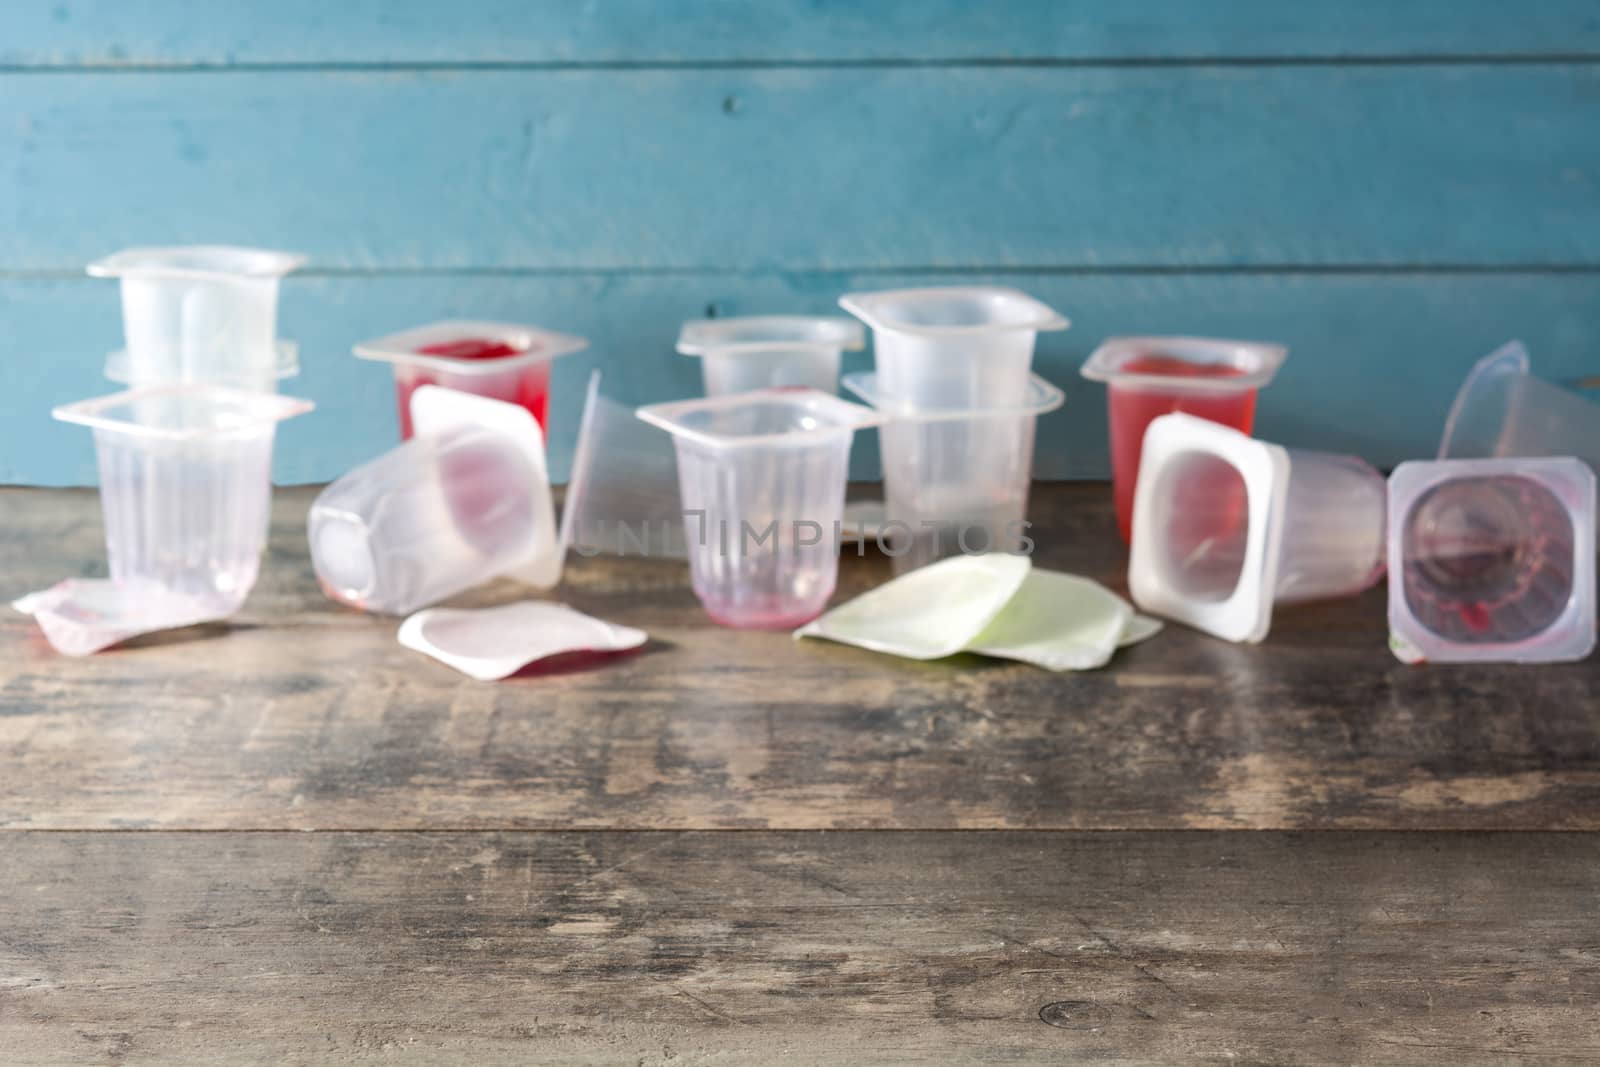 Empty plastic cups of jjellies on wooden background